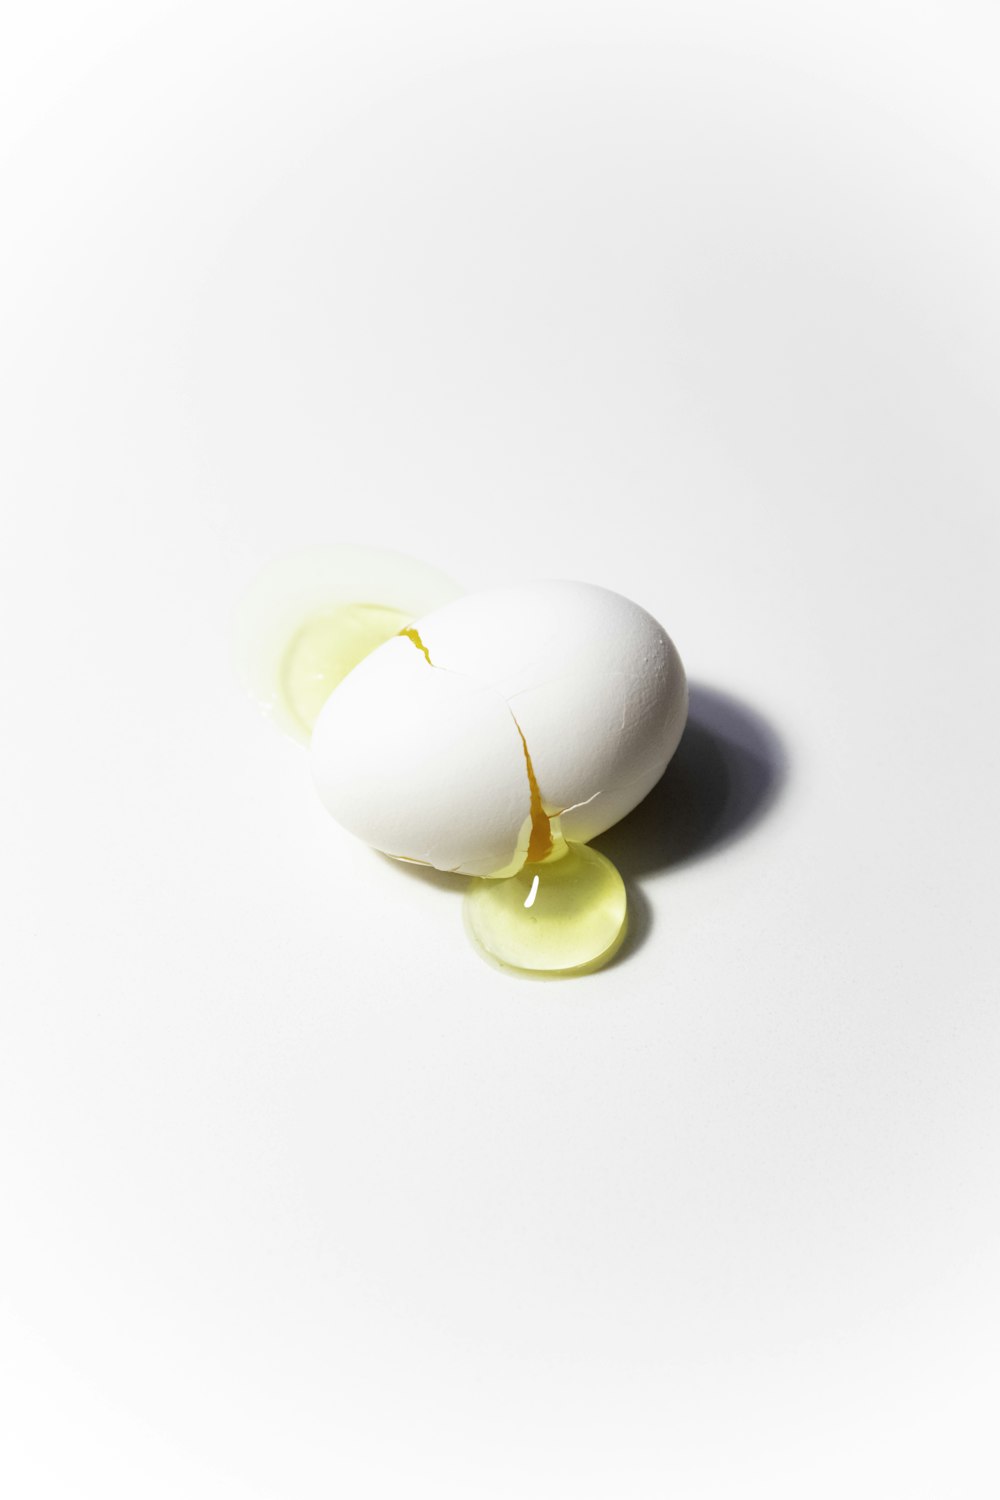 albume d'uovo su superficie bianca